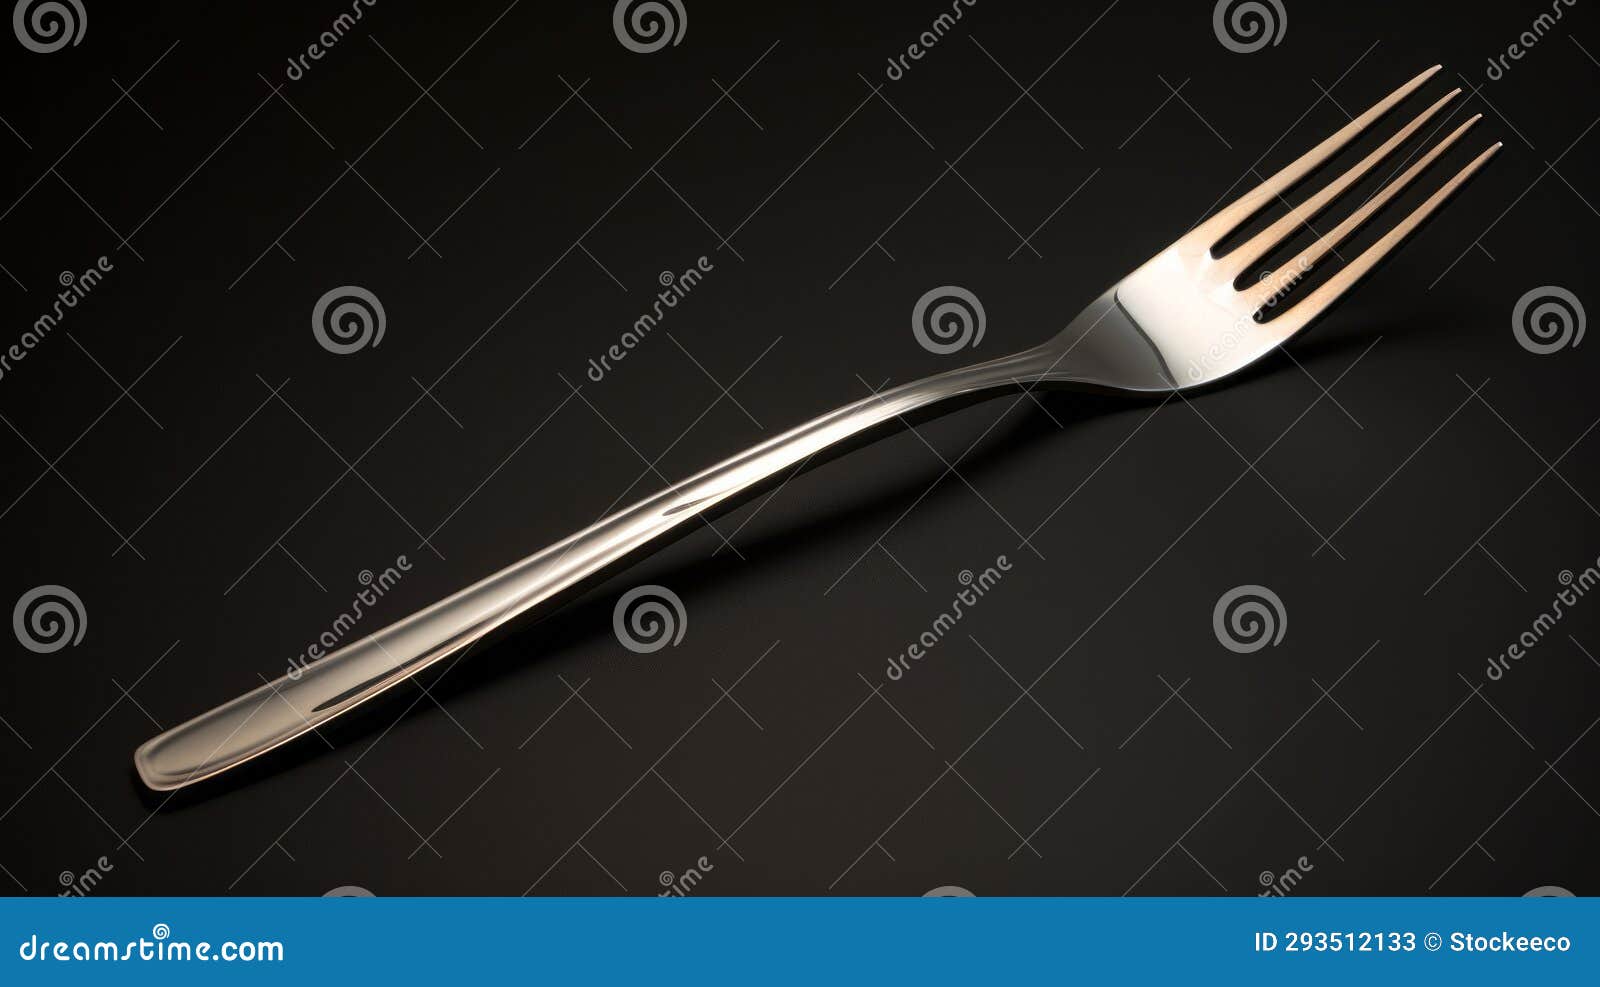 sleek chrome-plated fork on black background - uhd image